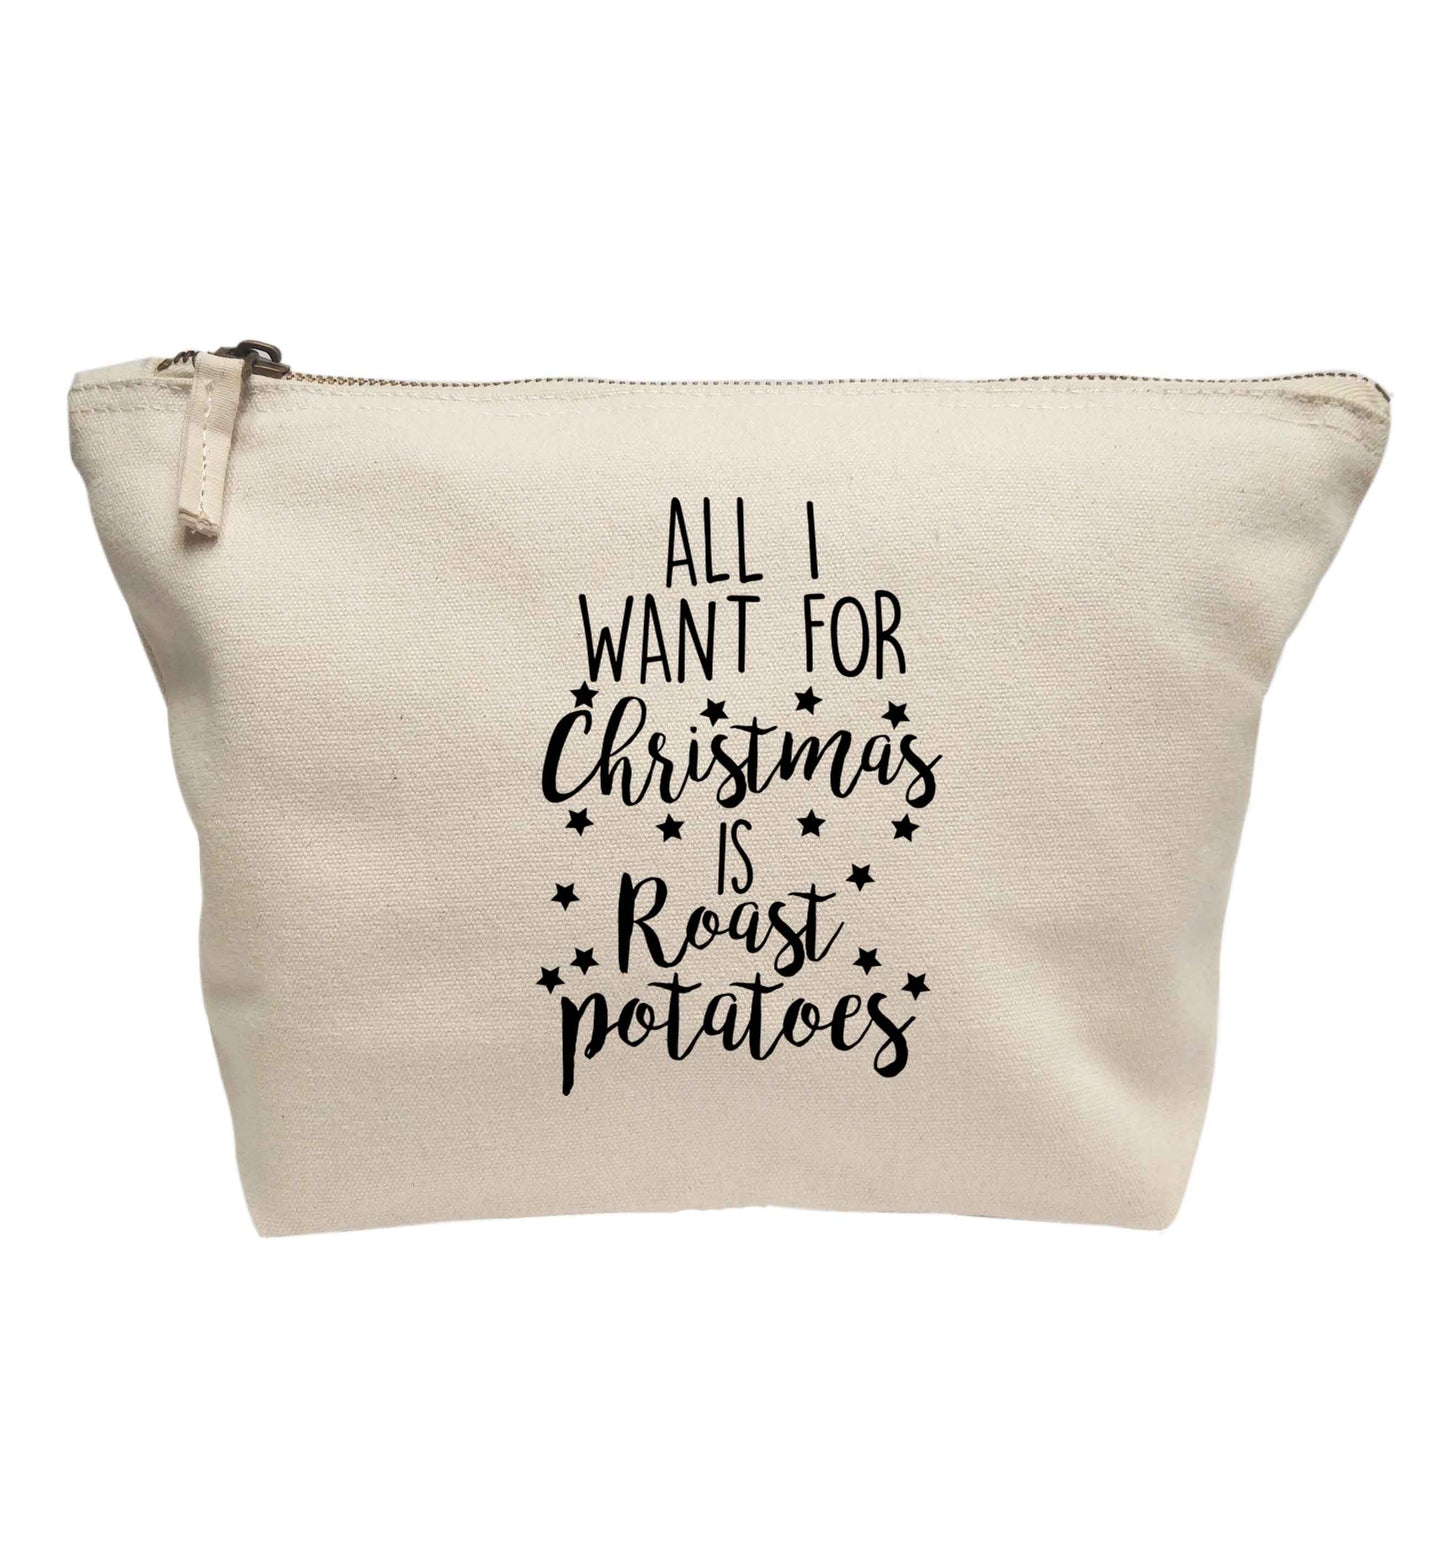 All I want for Christmas is roast potatoes | Makeup / wash bag